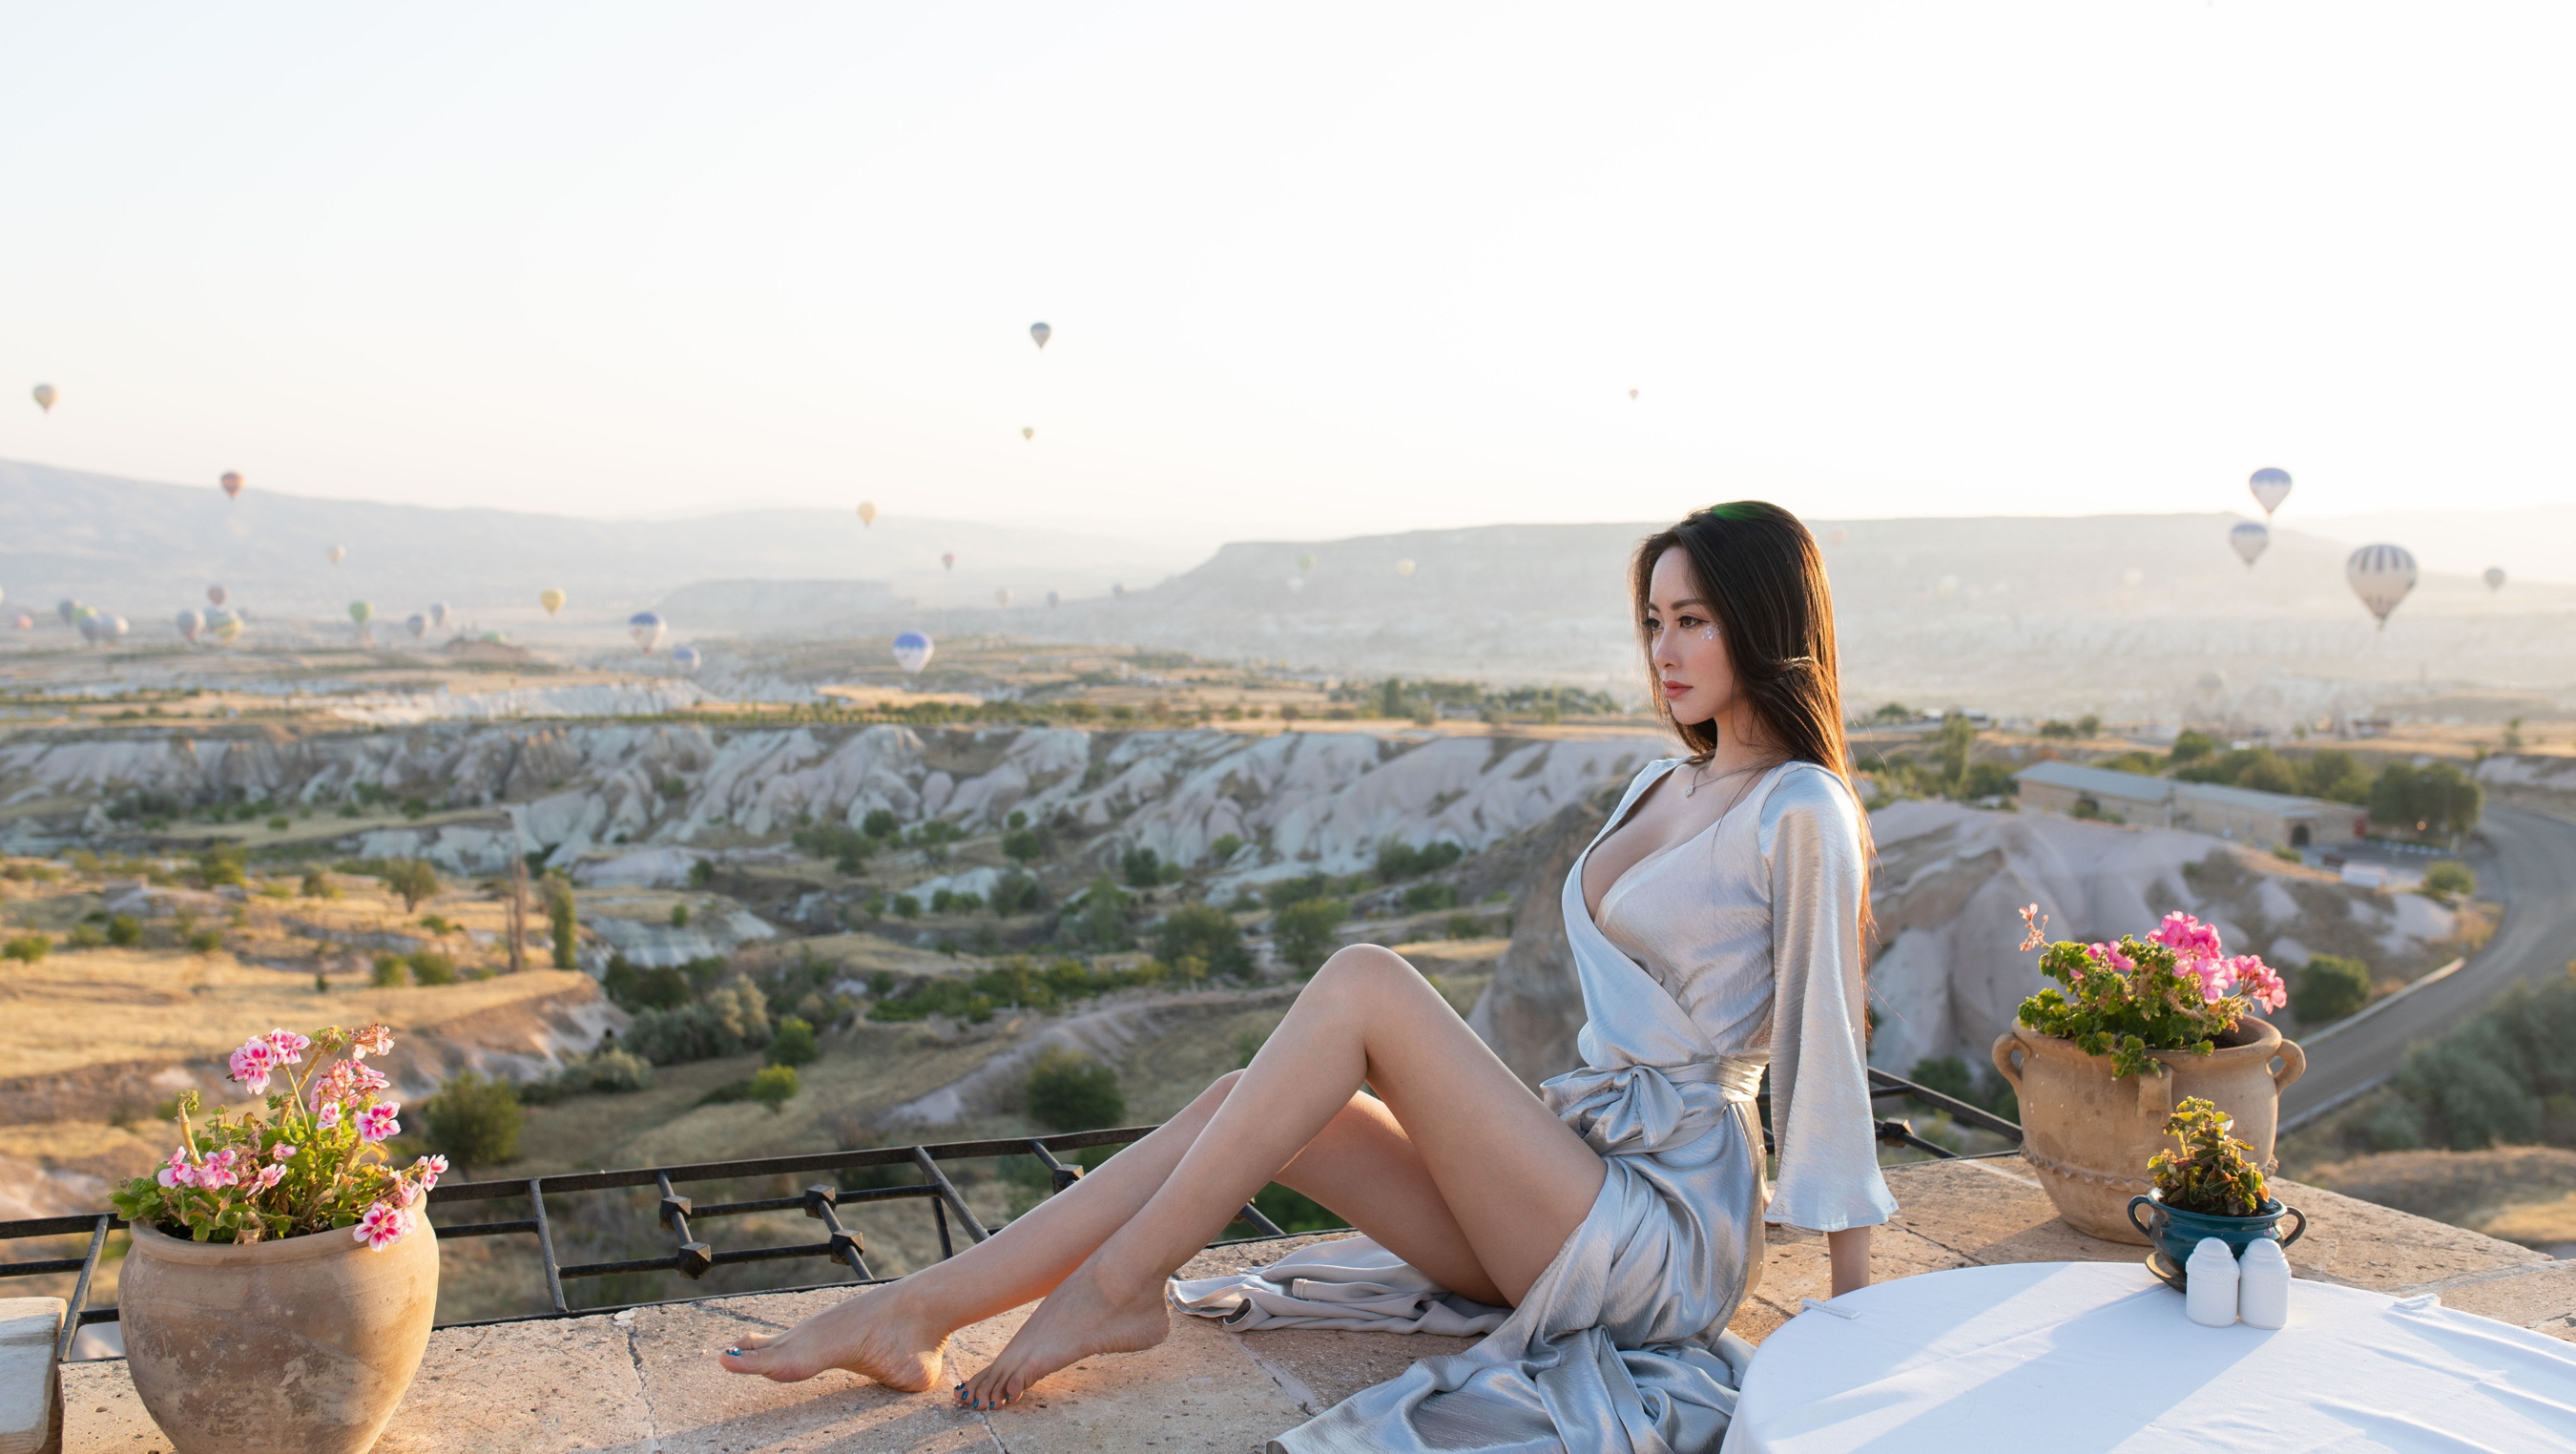 Asian Model Women Long Hair Dark Hair Sitting Hot Air Balloons Outdoors 2700x1524